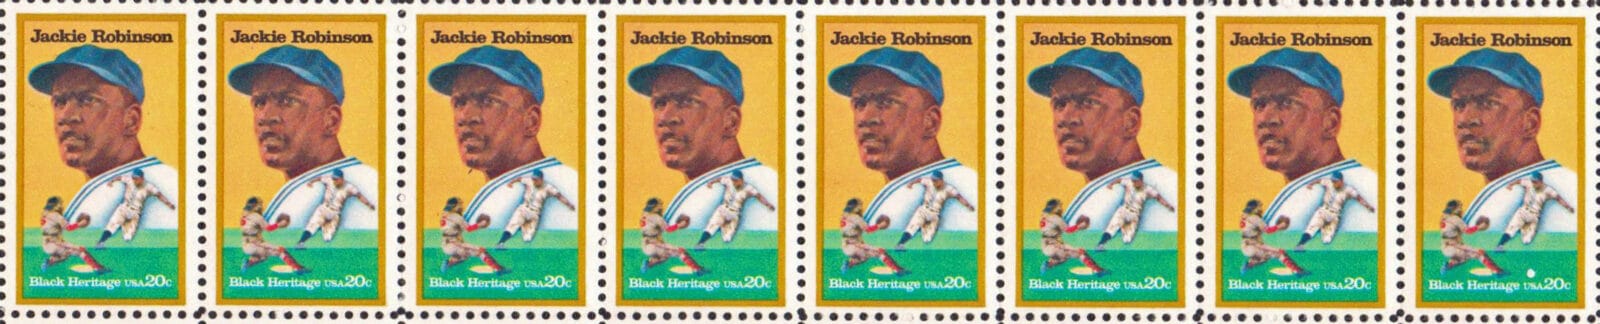 Jackie Robinson, 1982 U.S. Postage Stamp header